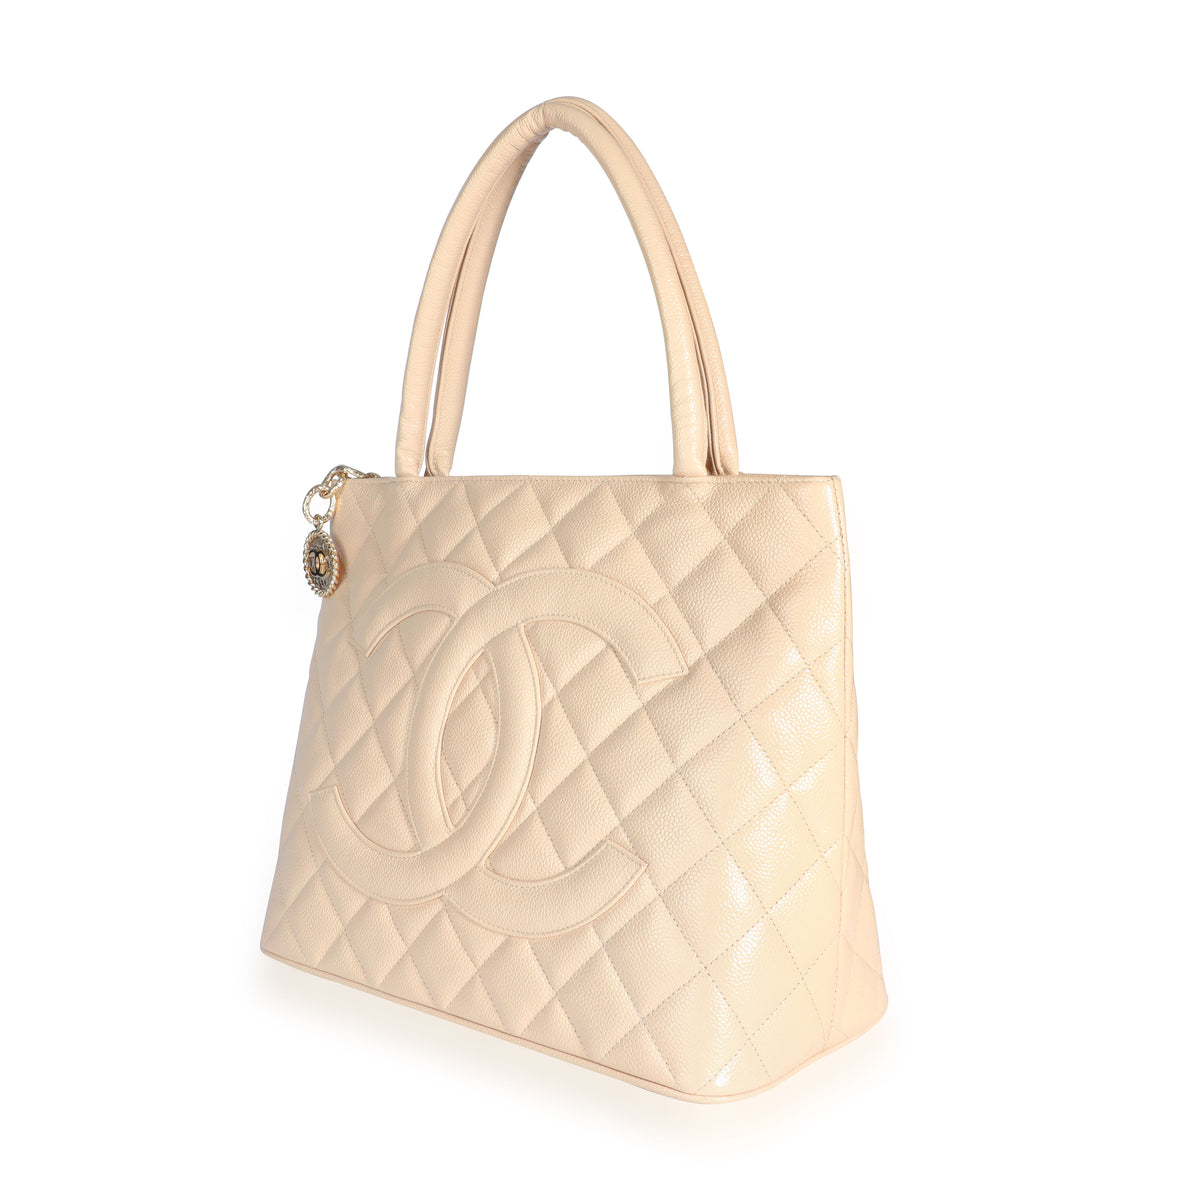 Like New*Chanel Medallion Tote Bag in cream beige, Women's Fashion